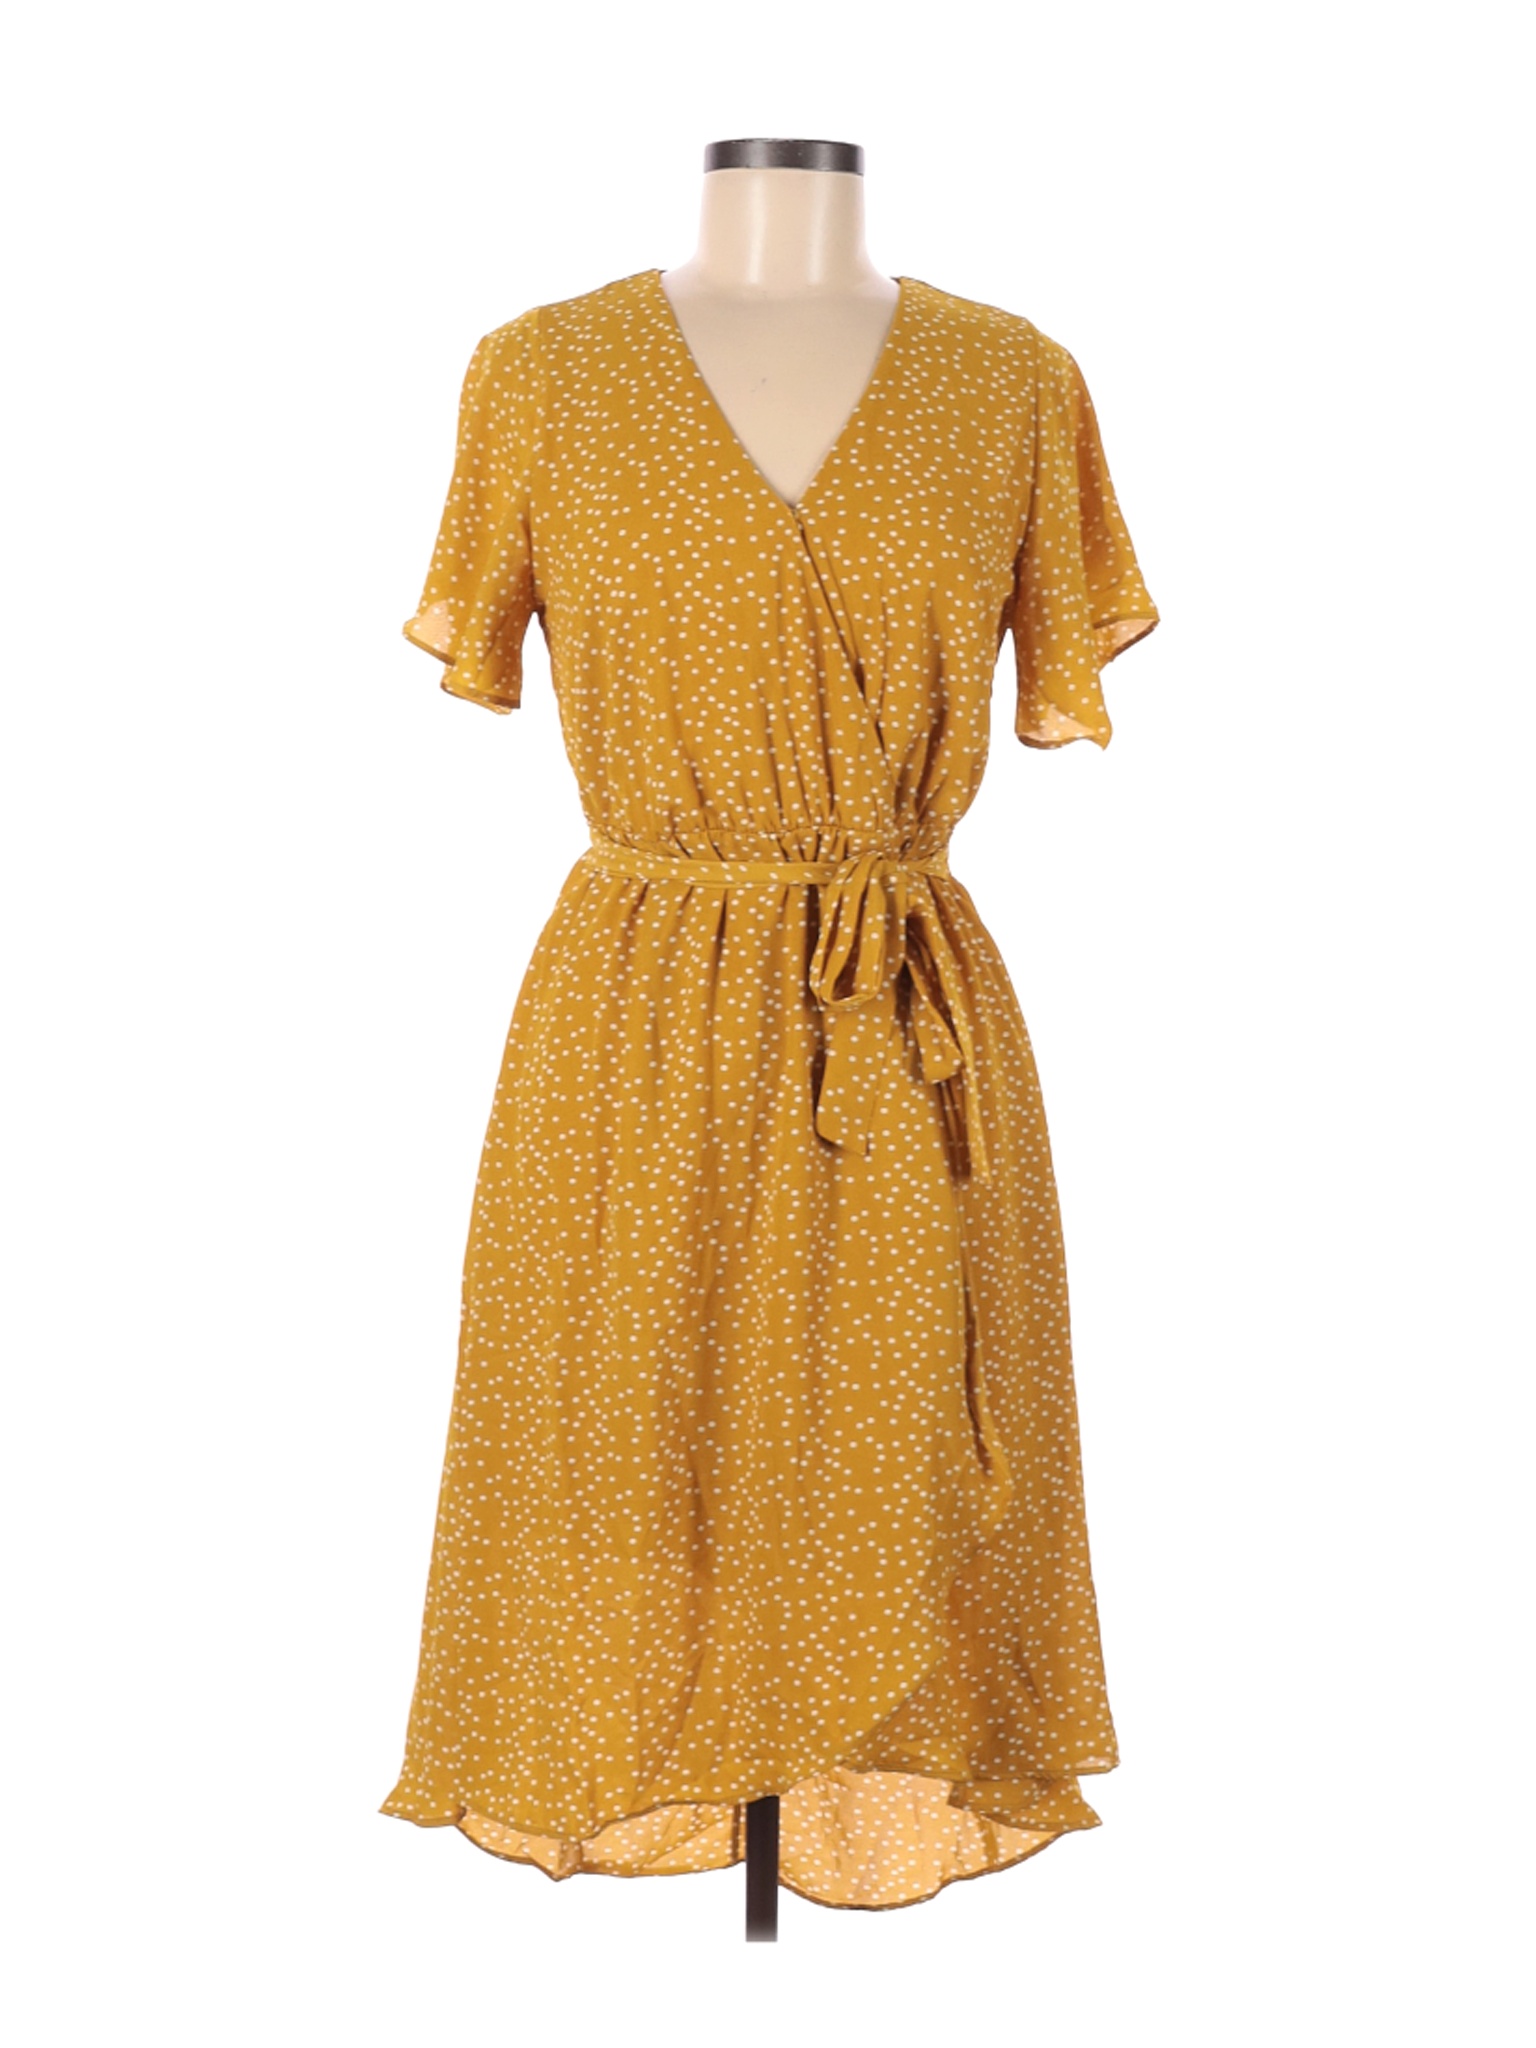 Sienna Sky Women Yellow Casual Dress M | eBay